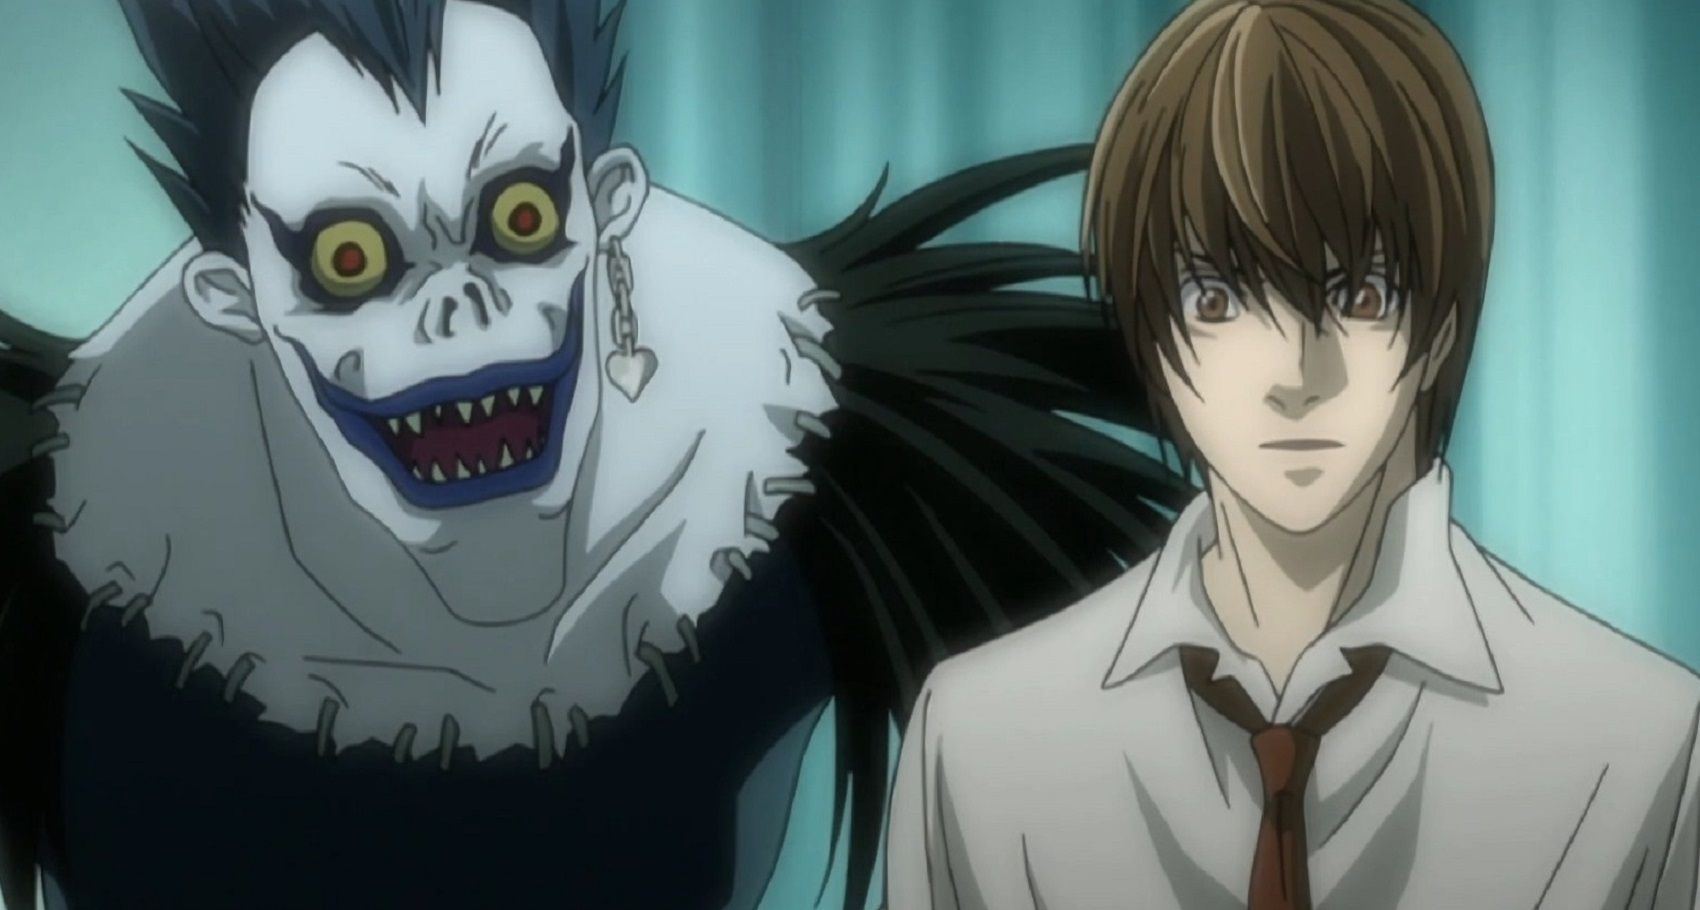 Streaming da HBO terá animes como Death Note e Fullmetal Alchemist